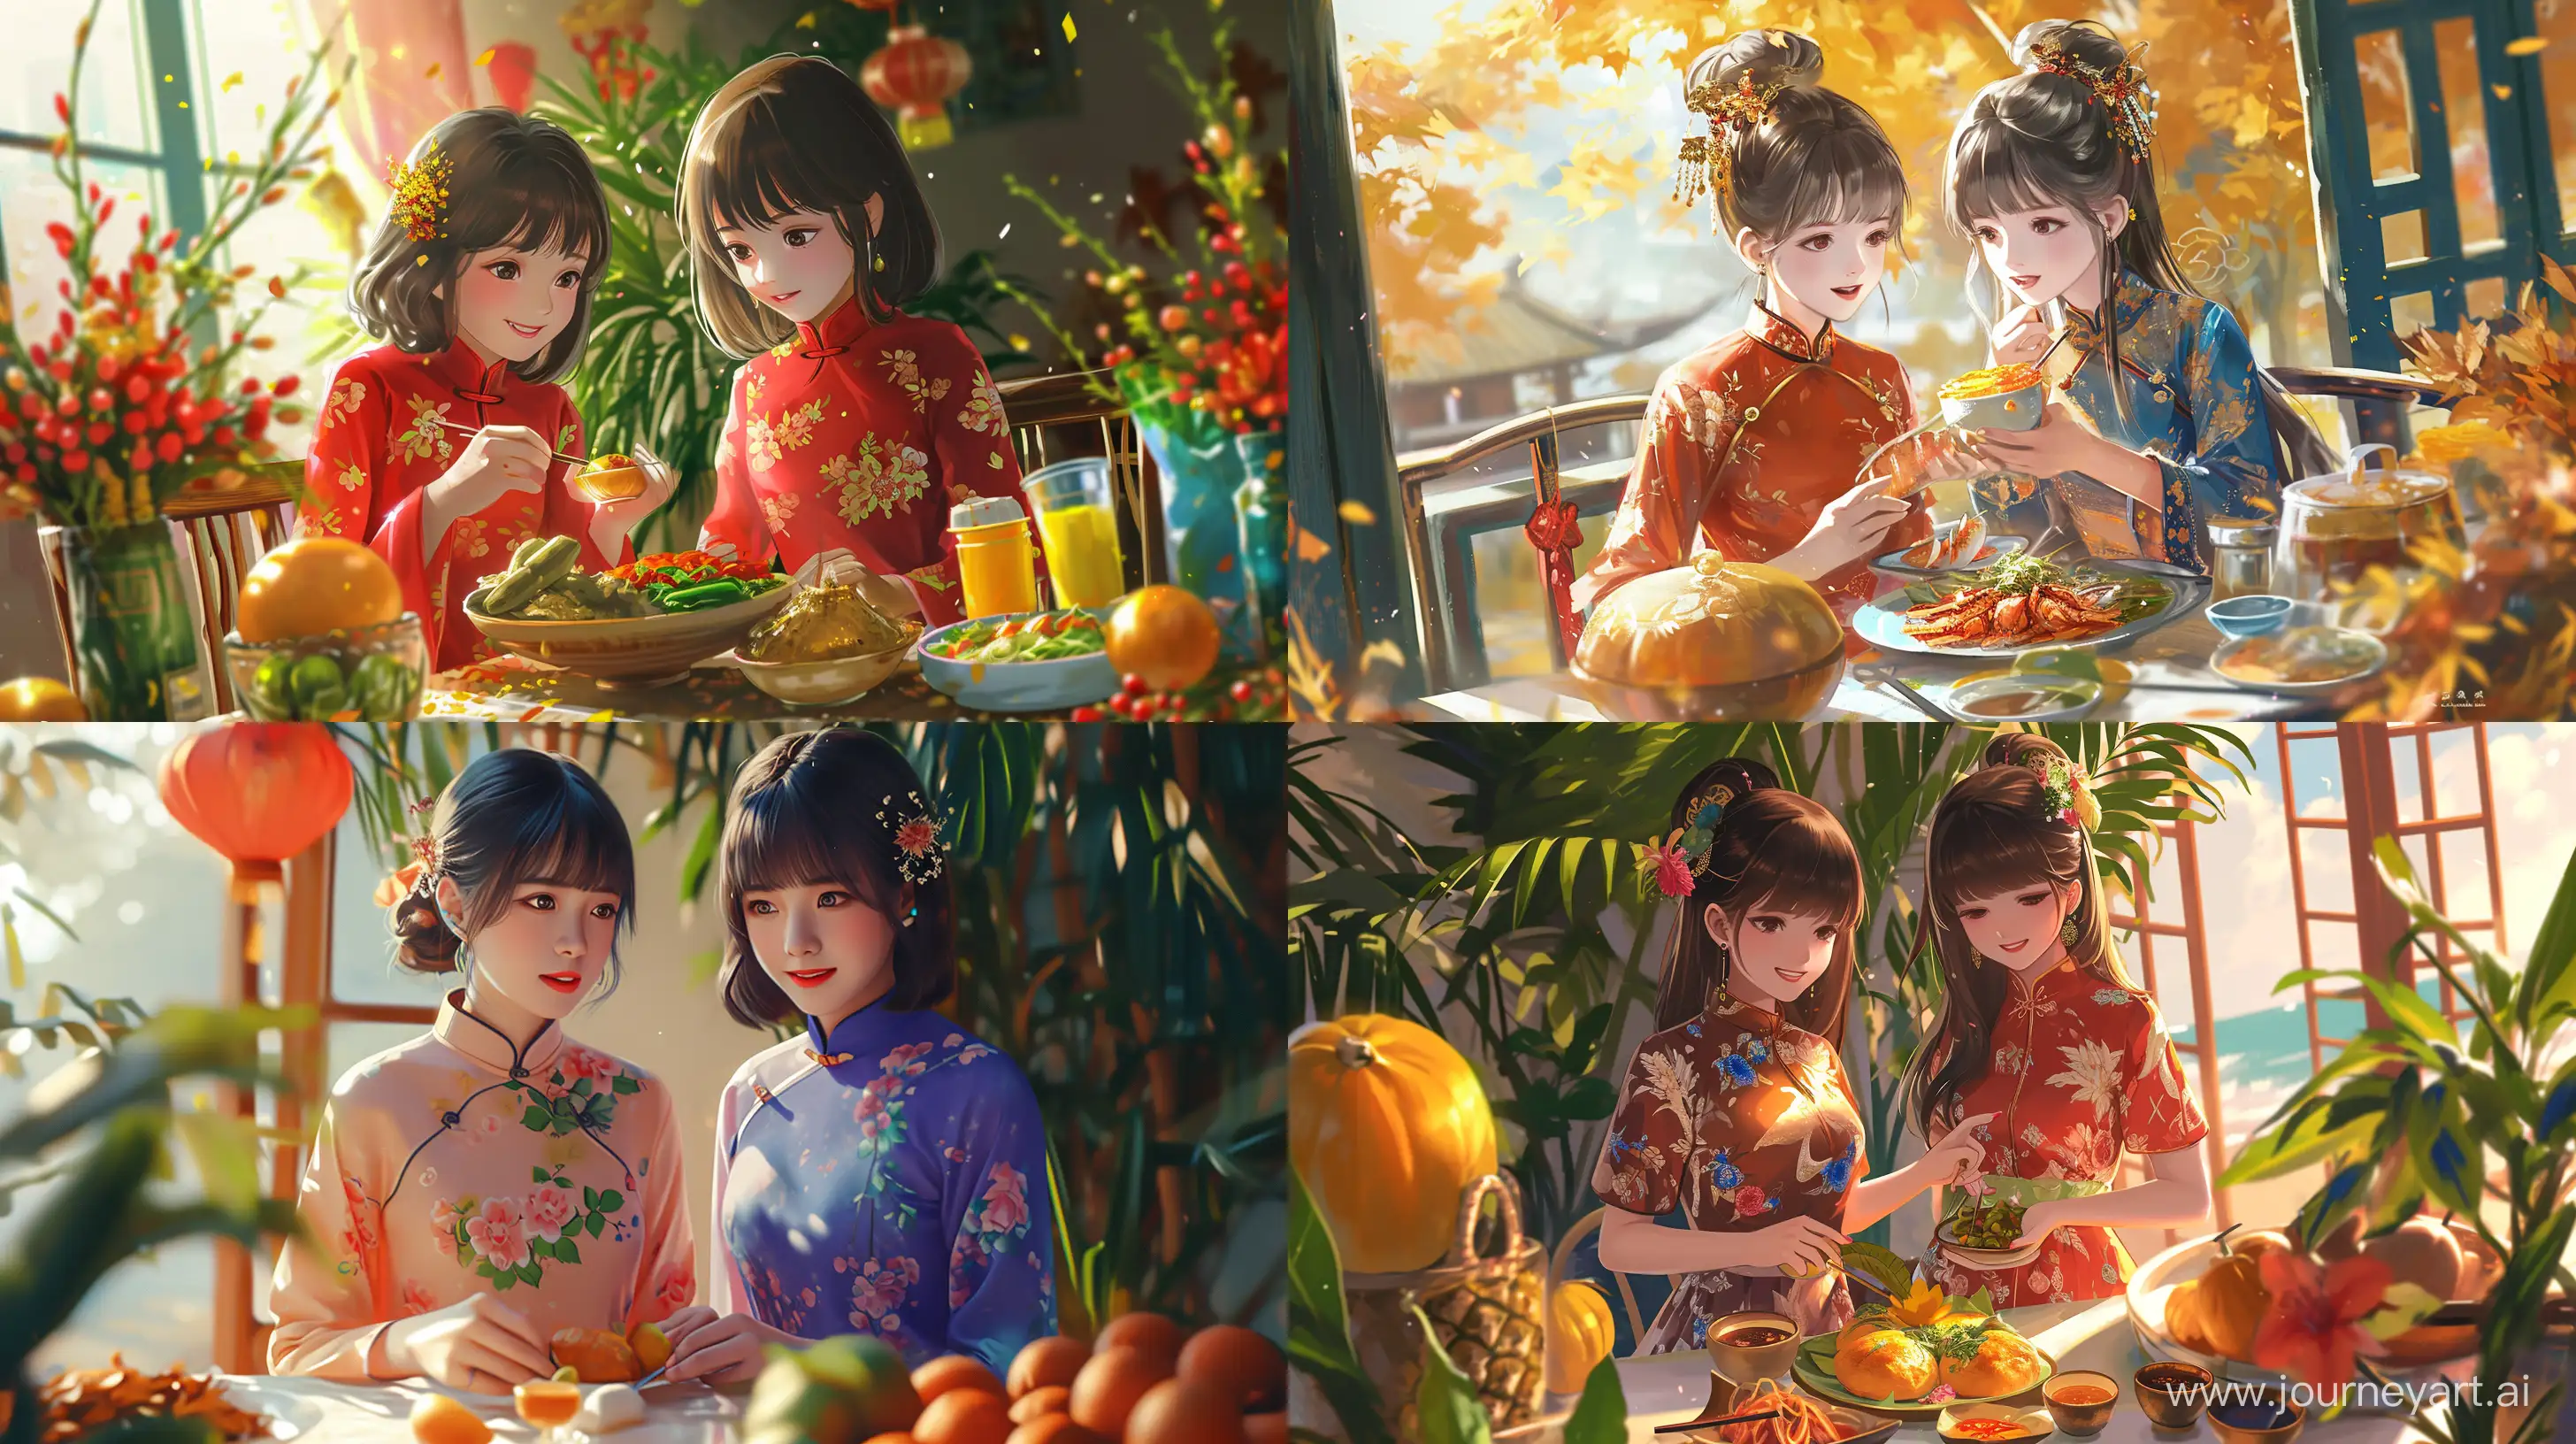 Vietnamese-Tet-Celebration-Dynamic-Ao-Dai-Girls-with-Festive-Food